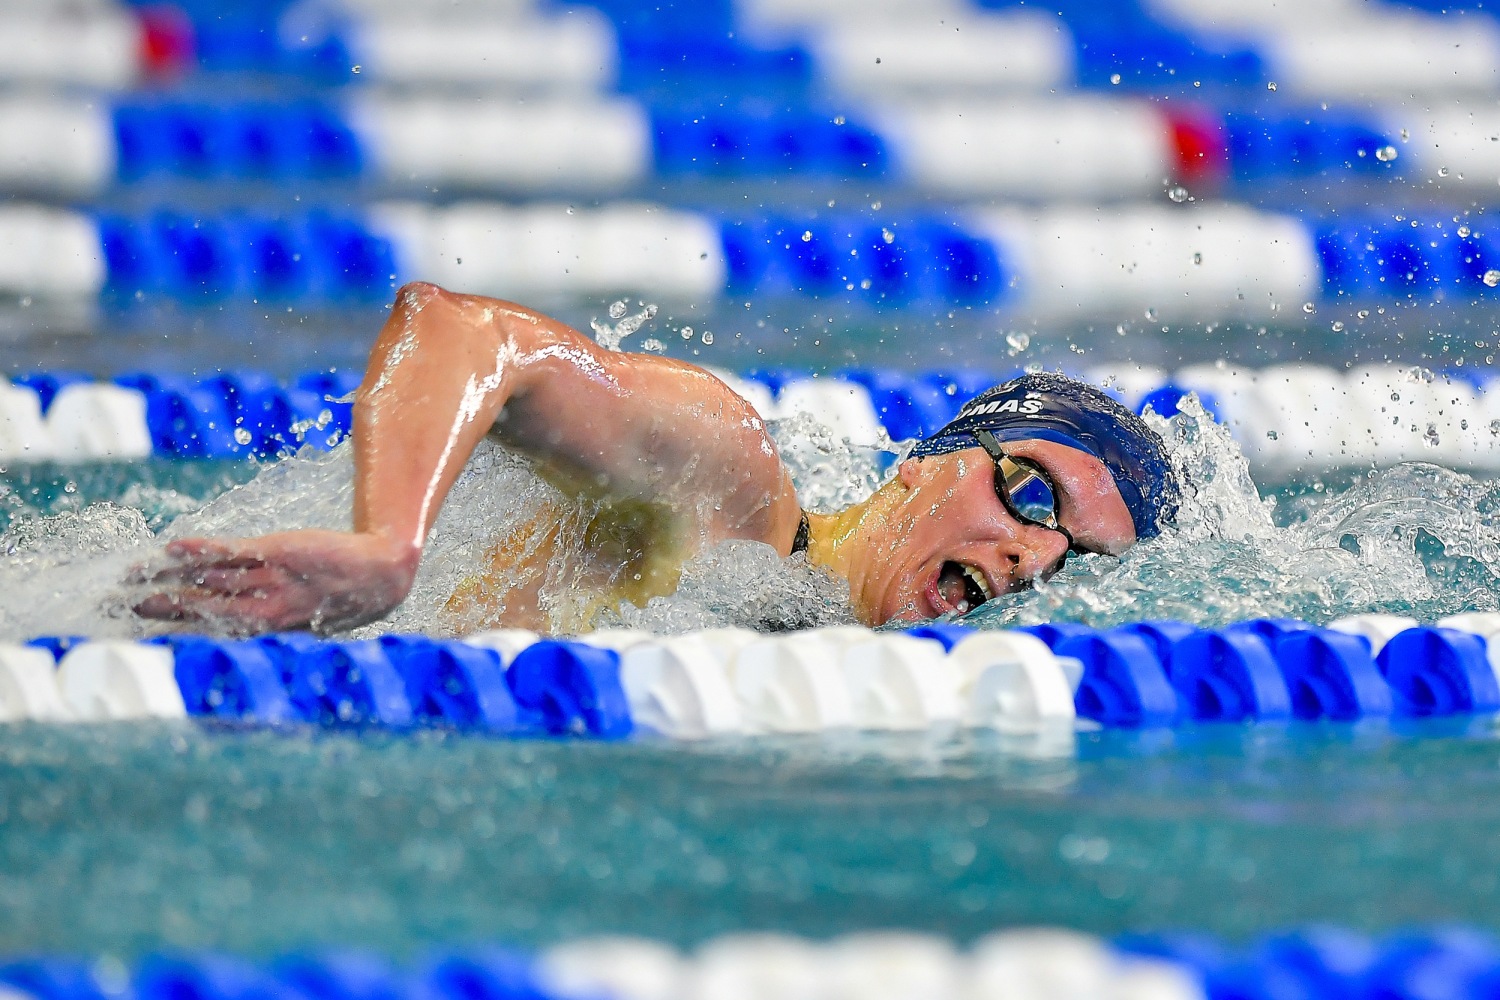 Trans swimmer Lia Thomas loses legal battle, Olympics hopes dashed